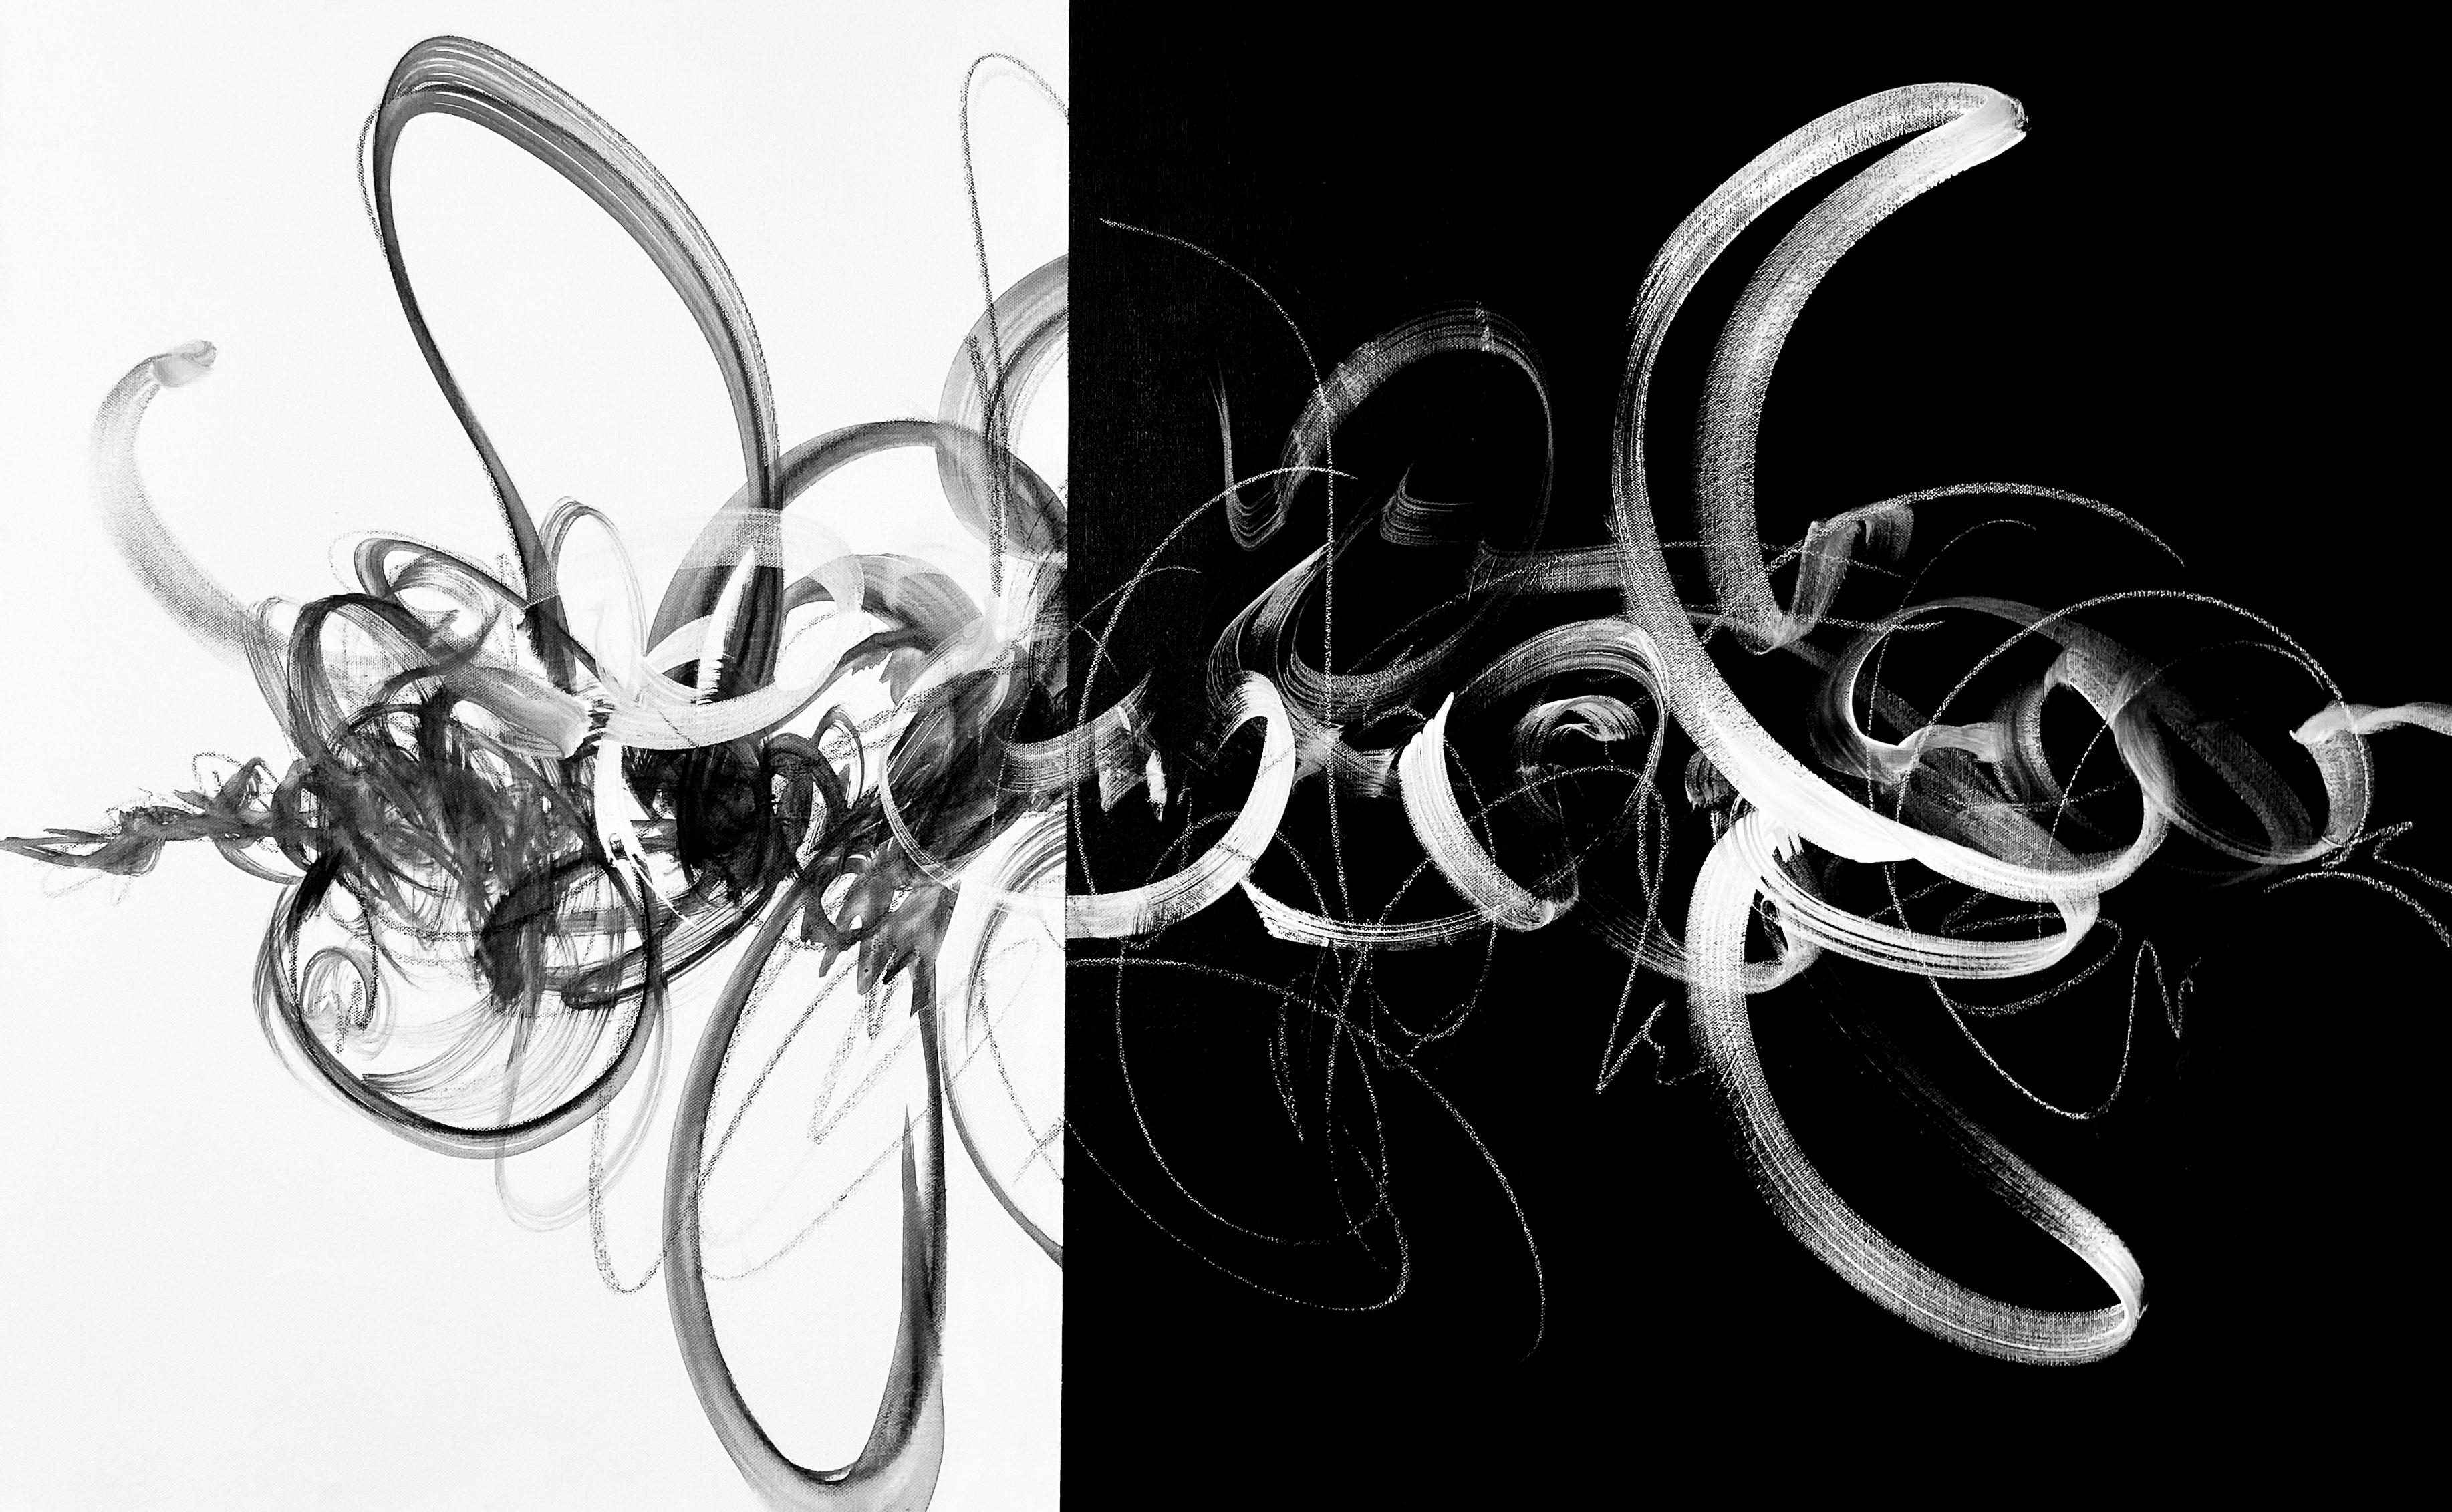 Michelle Thomas Artist Abstract Painting – "Feelin' It, III", lebhaft, frech, schwarz-weiß, groß, abstrakt, modern, vivid